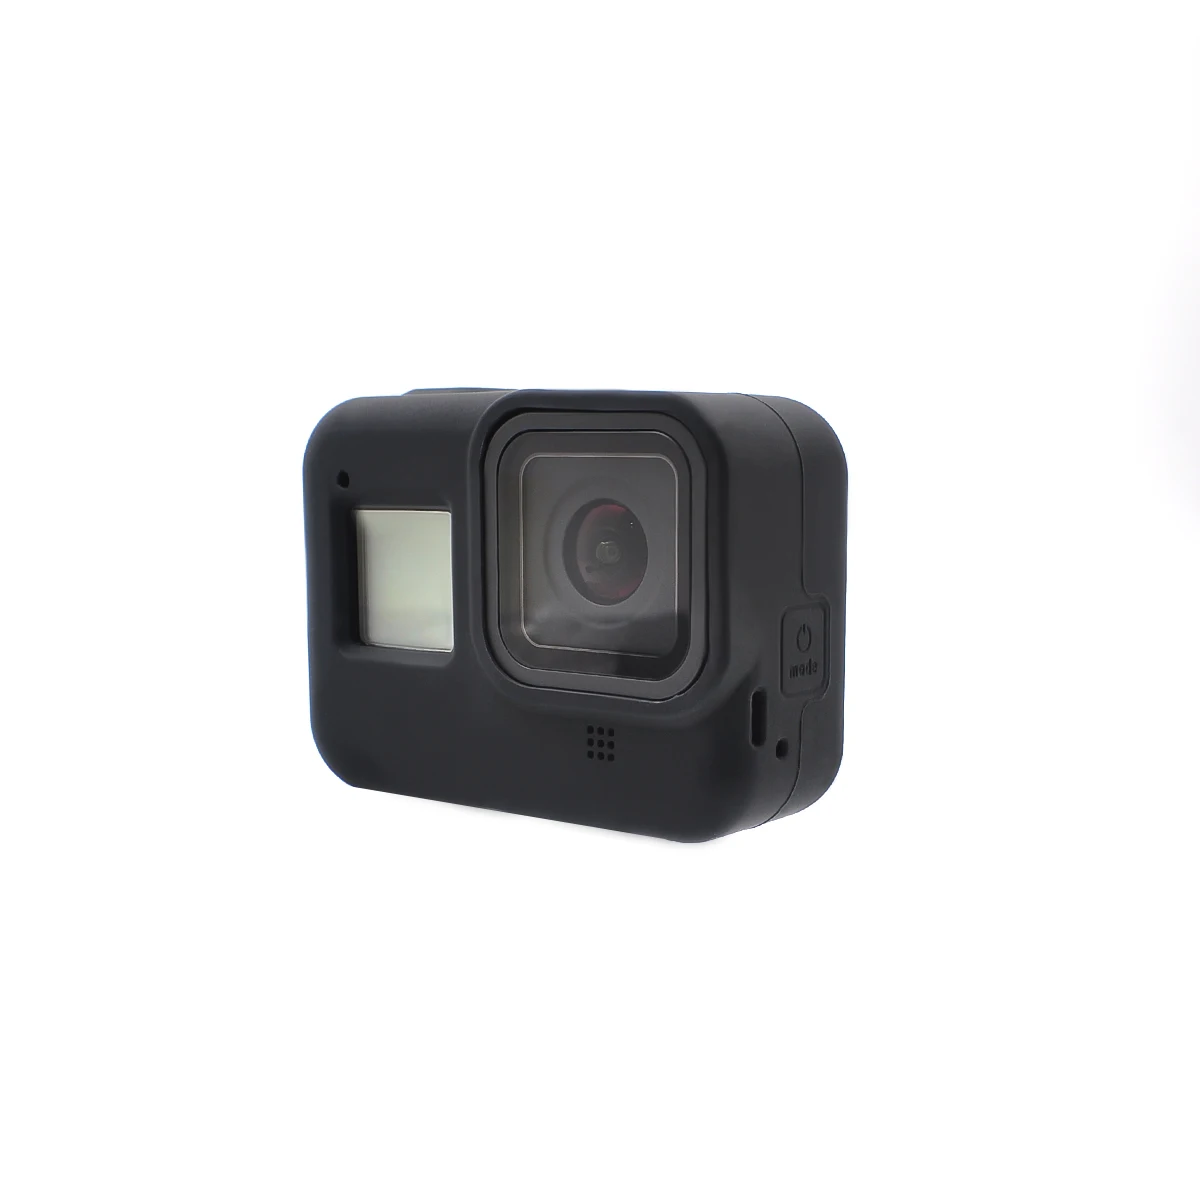 4in1 Silicone Case Storage bag Anti-lost Wrist Strap Neck lanyard for Gopro Hero 8 Black camera Camera Protective accessories